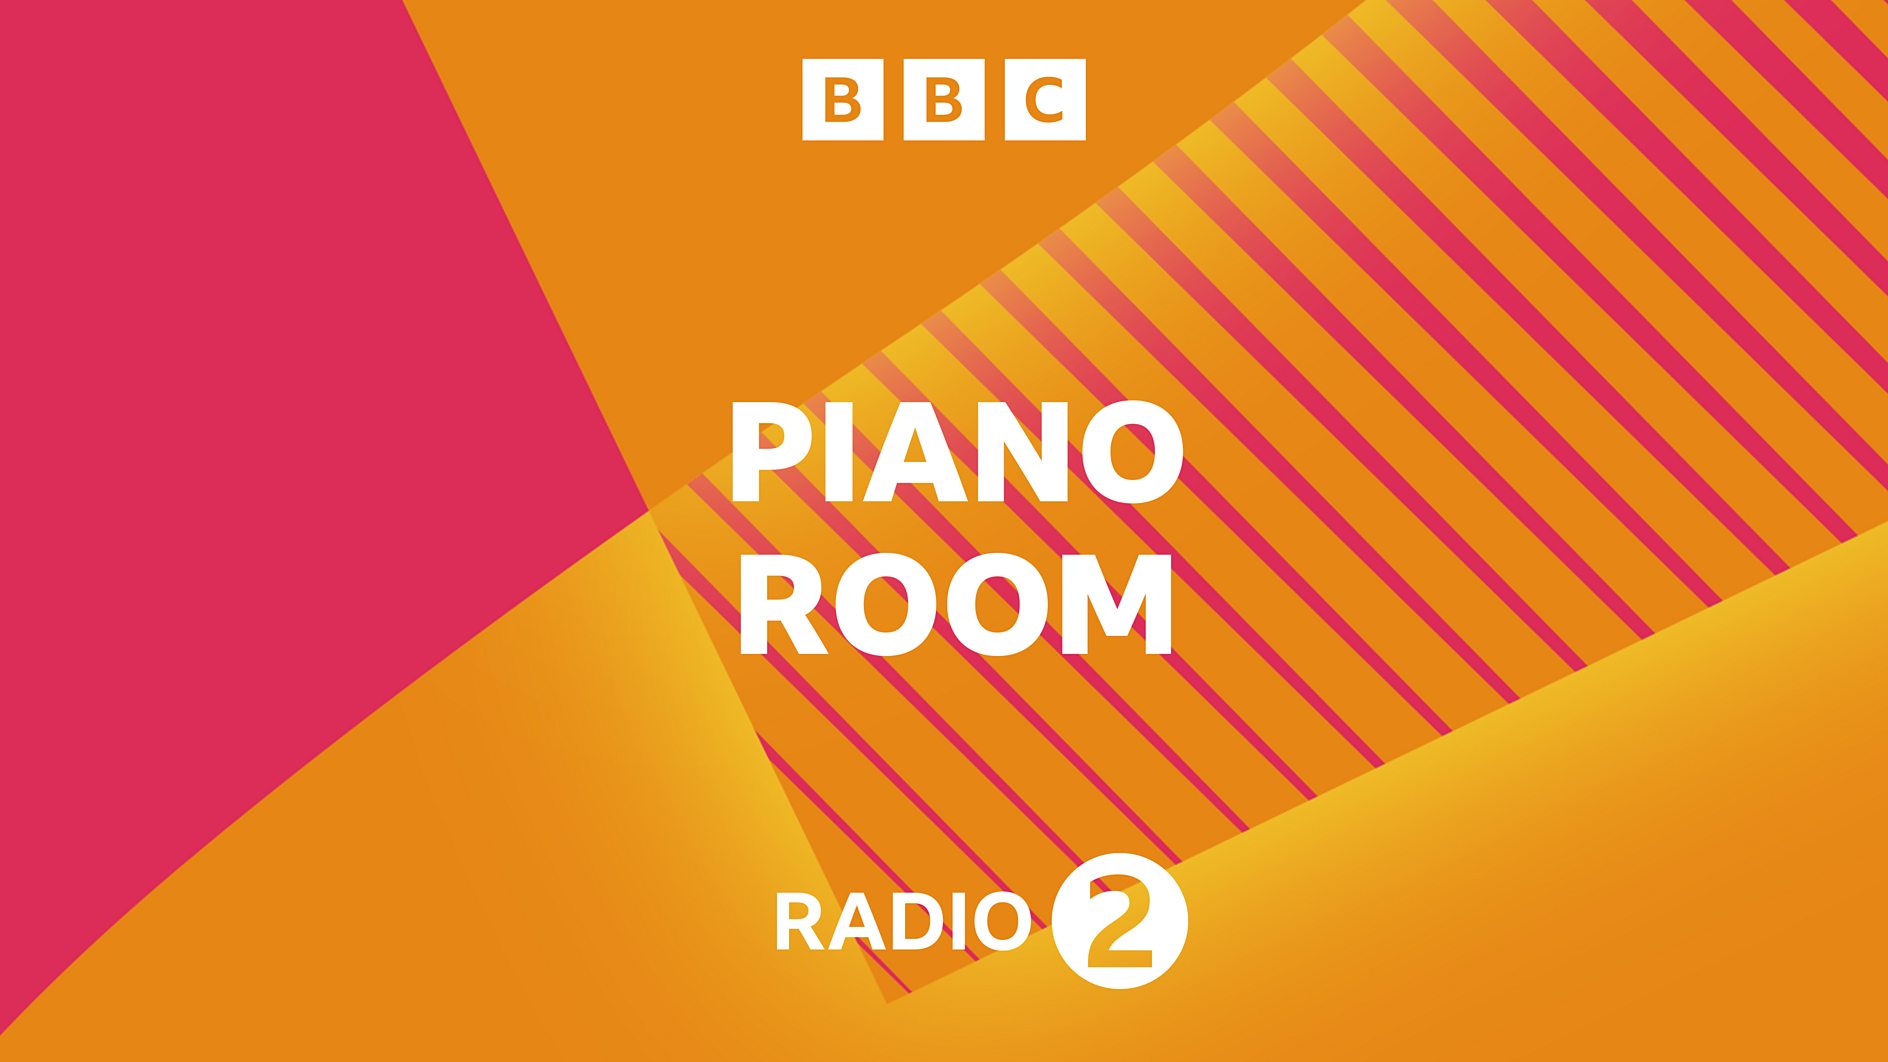 BBC Radio 2’s Piano Room kicks off a Spring of music delights